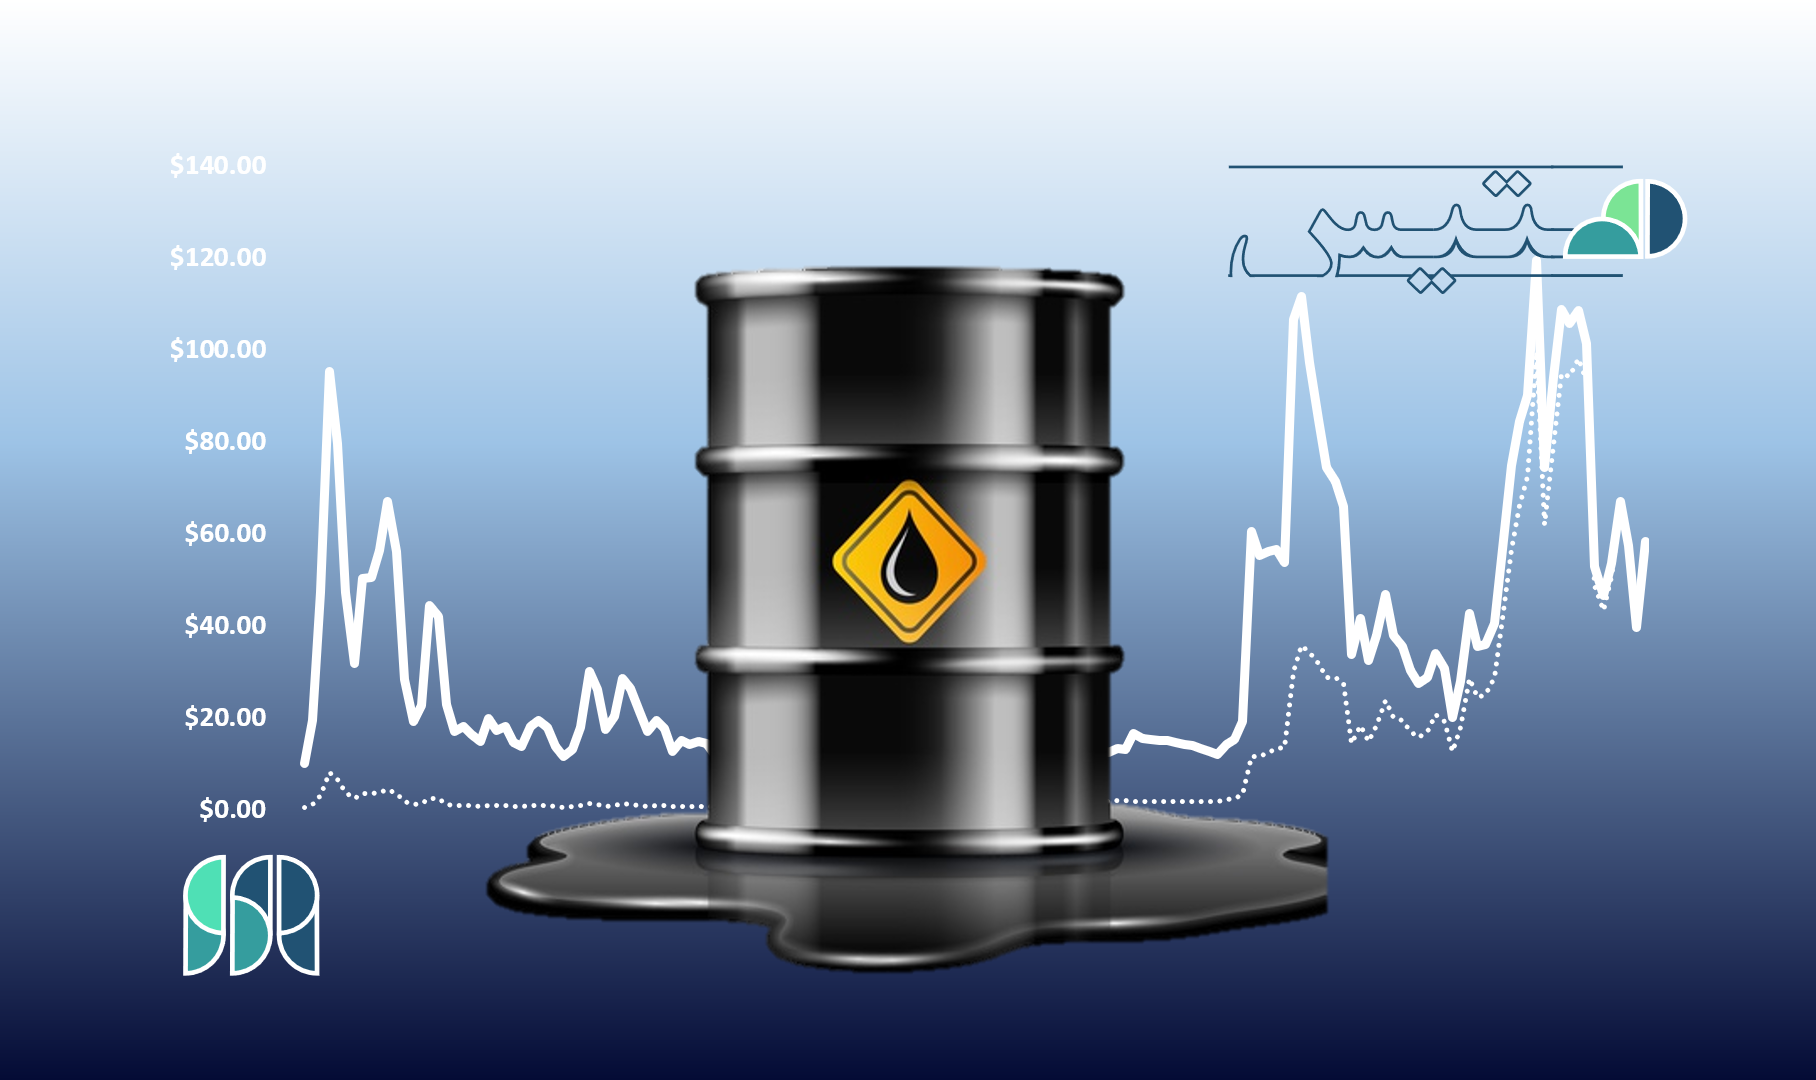 oil price forecast 2050